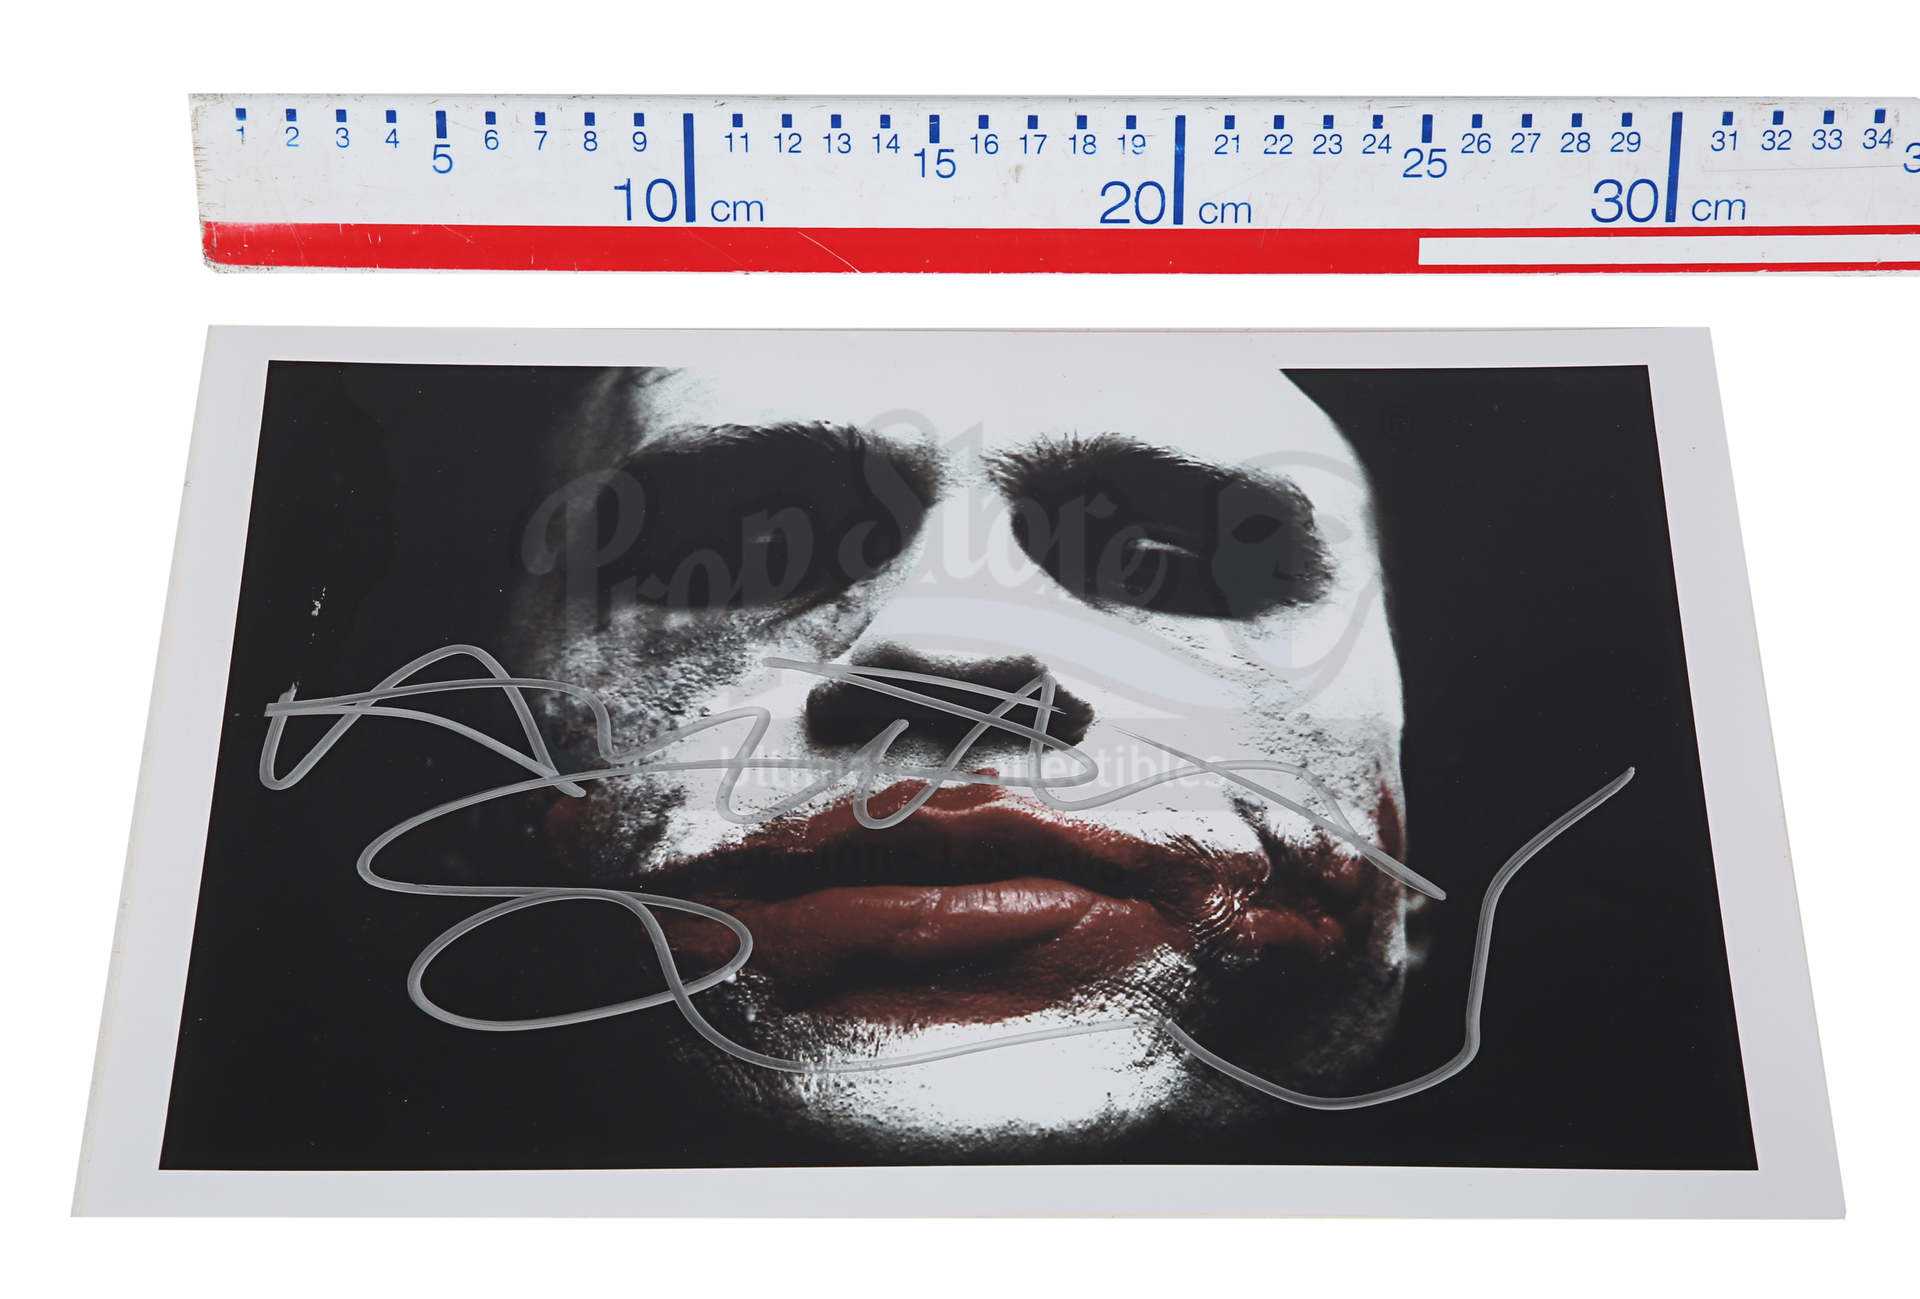 THE DARK KNIGHT (2008) - Heath Ledger 'Joker' Autographed Photo - Image 4 of 4